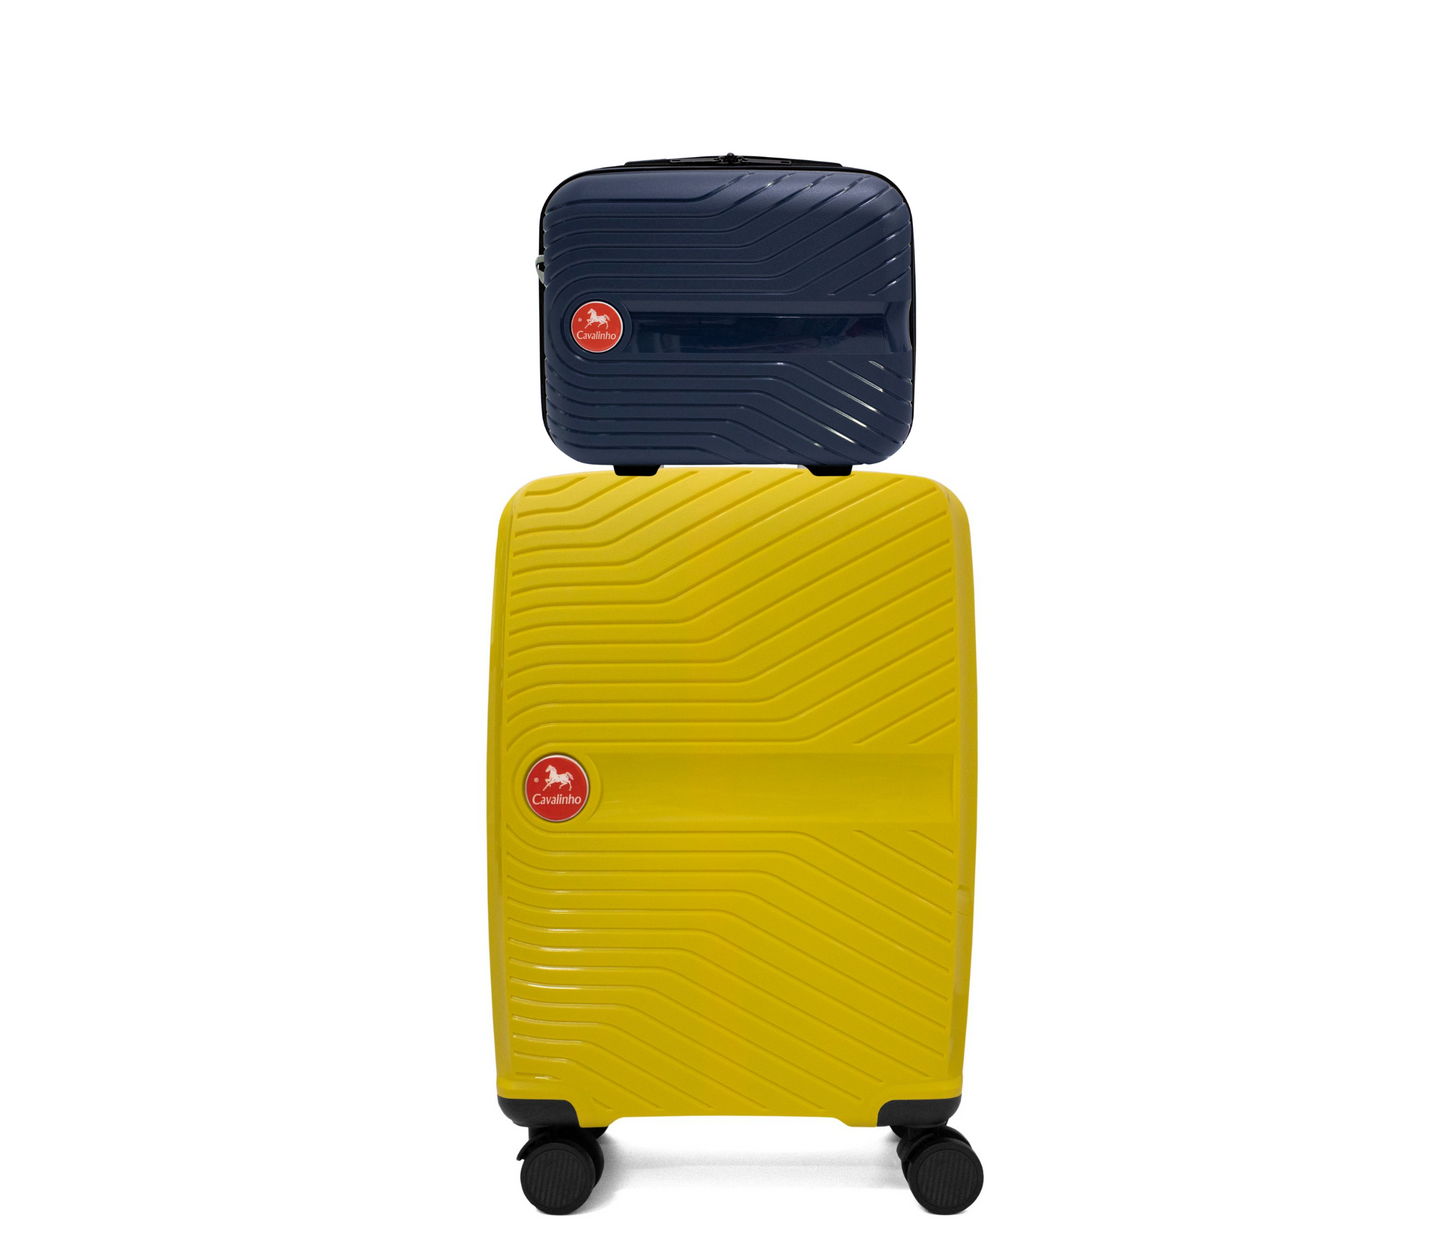 Cavalinho Canada & USA Colorful 2 Piece Luggage Set (15" & 19") - Navy Yellow - 68020004.0308.S1519._1